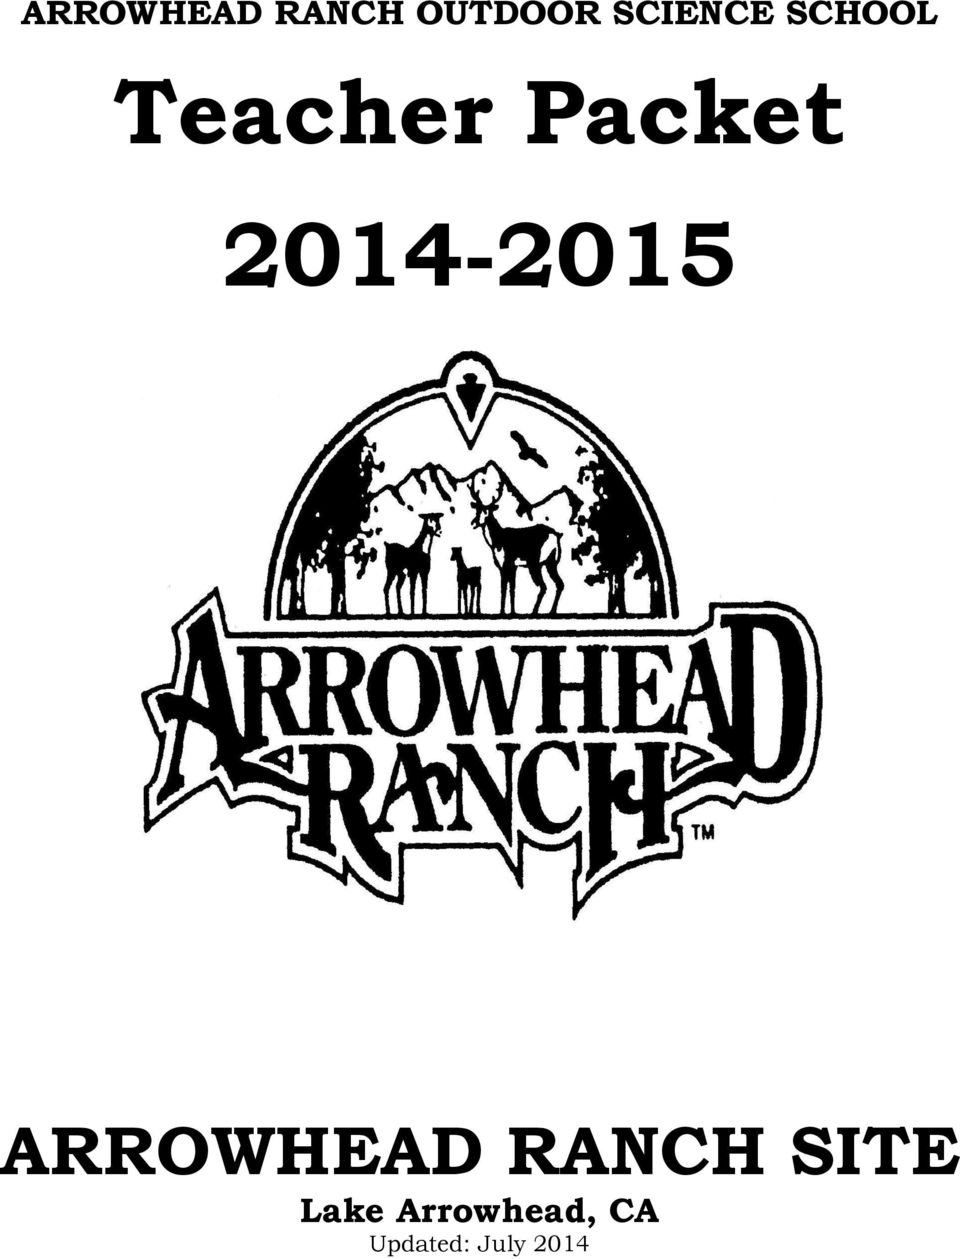 2014-2015 ARROWHEAD RANCH SITE